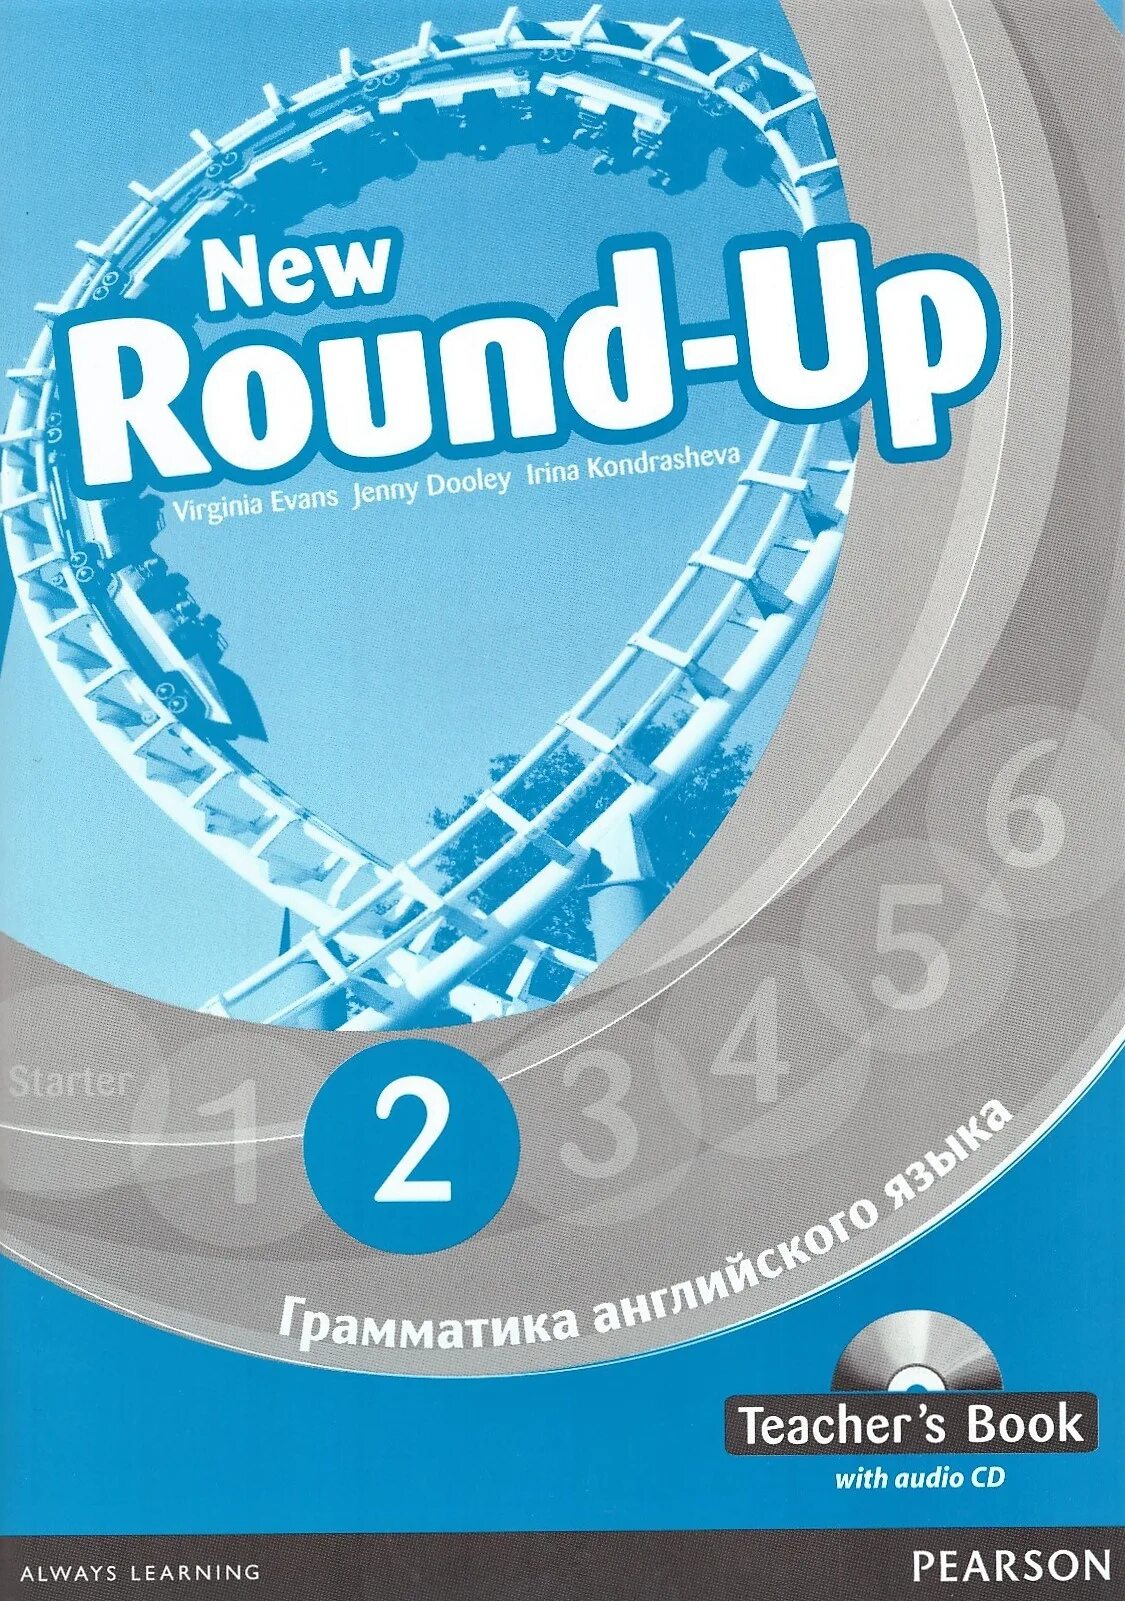 Английский New Round up Starter. Английский книга Round-up Starter. Evans New Round-up 4 грамматика английского языка teacher's book. Round up Starter teacher's book.